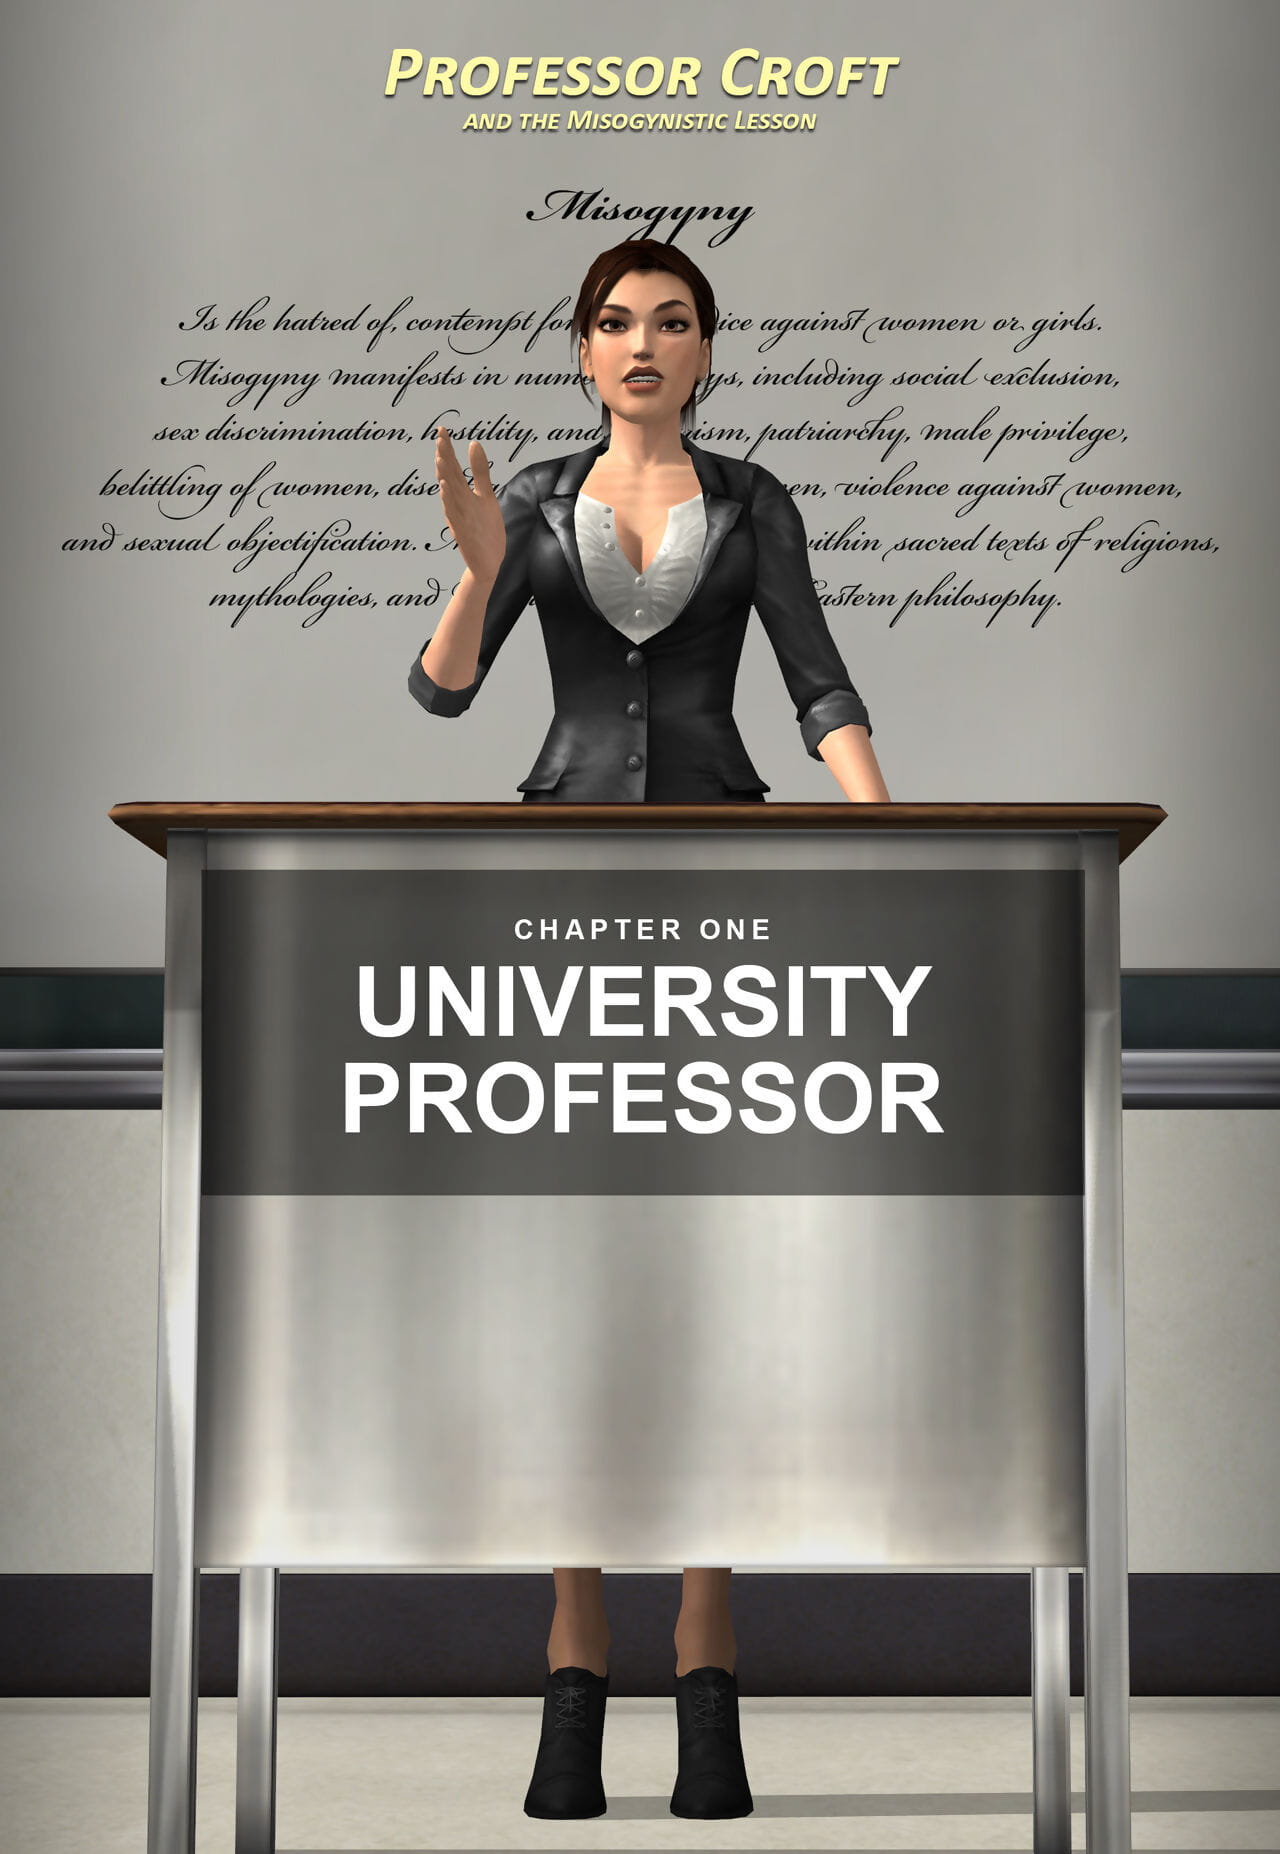 lctr Professor croft en De vrouwenhatende Les page 1